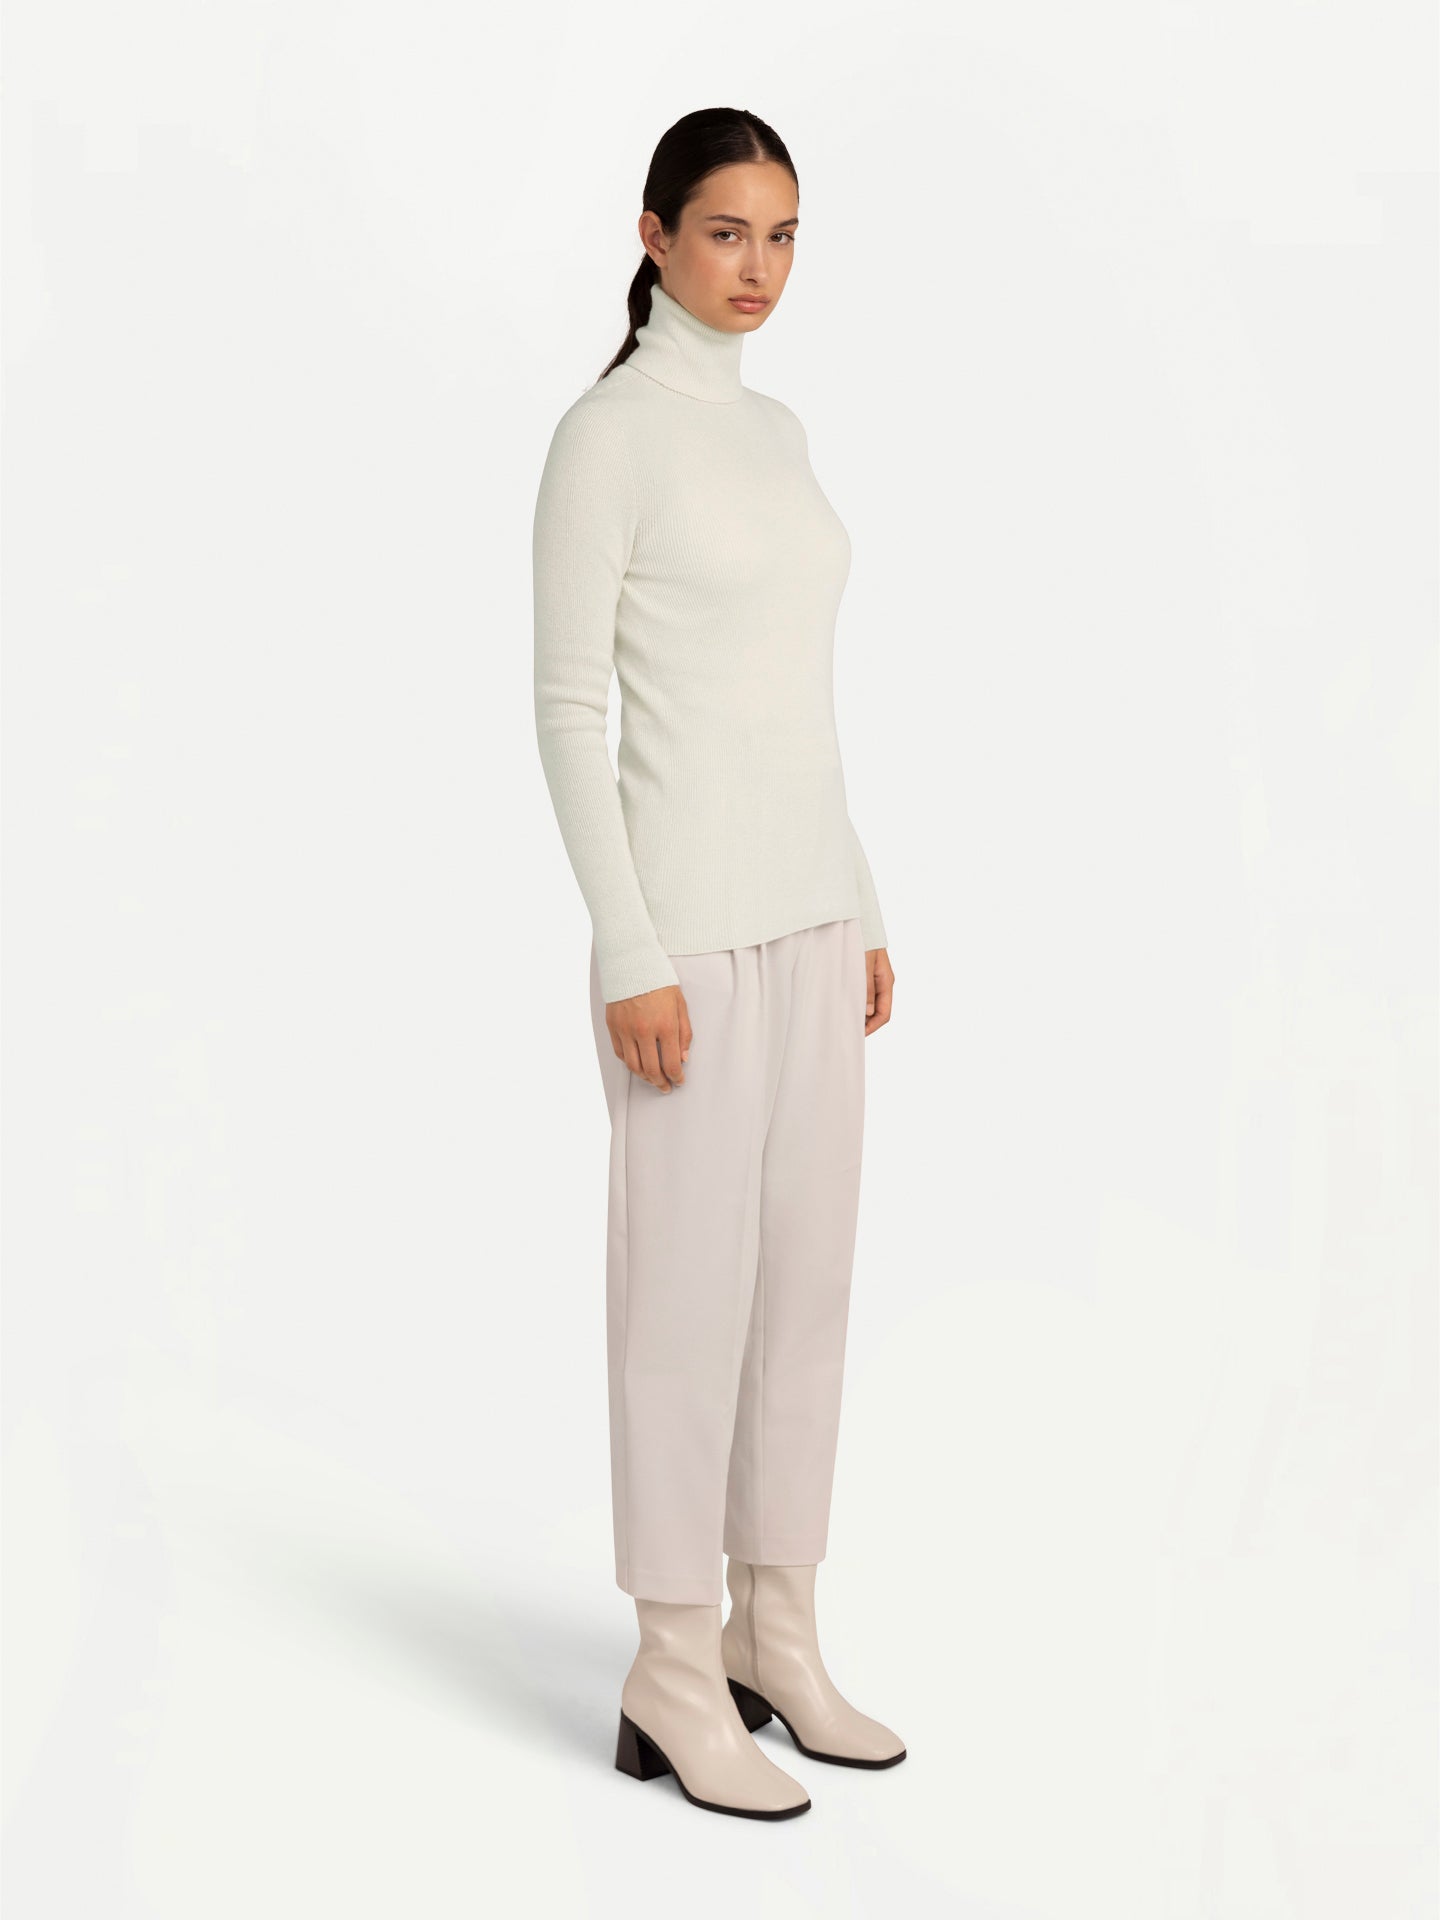 Women's Organic Cashmere Fitted Cashmere Turtleneck Off White - Gobi Cashmere